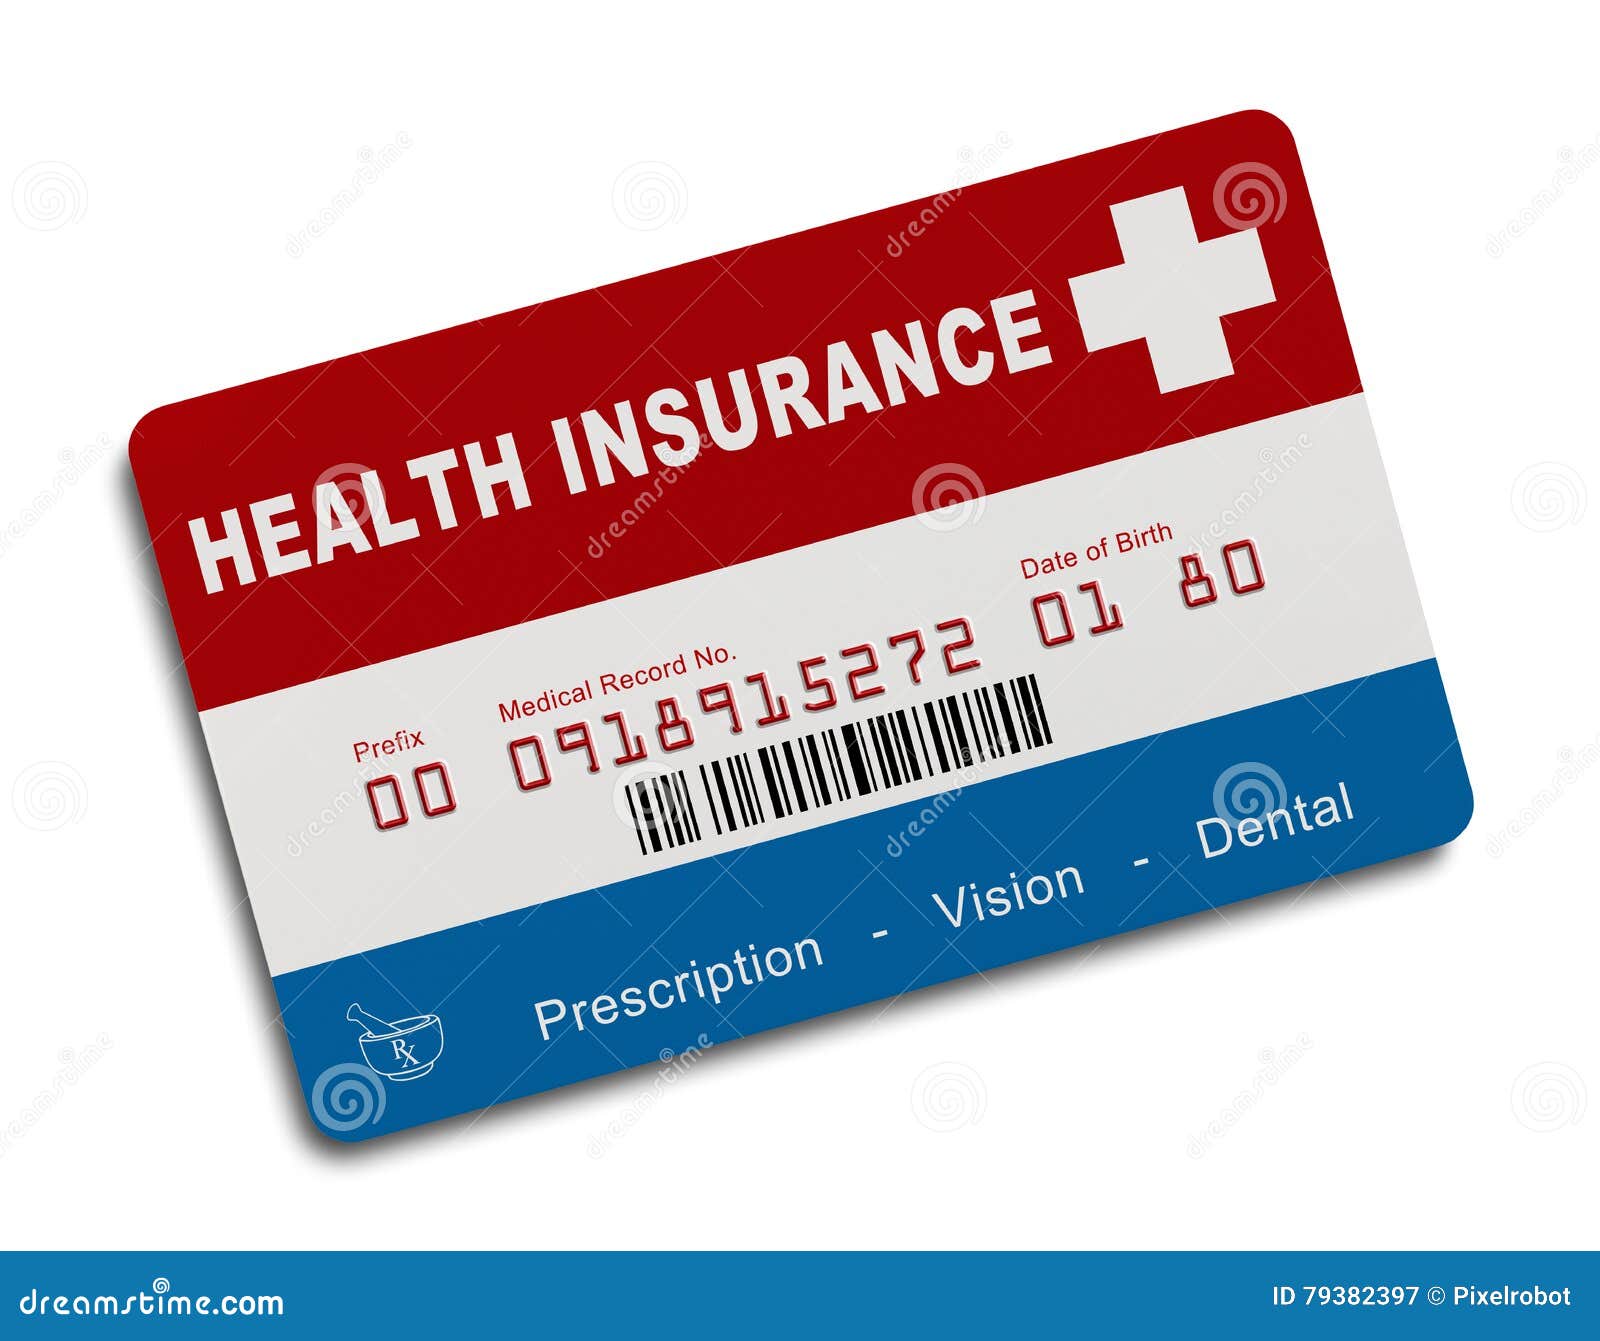 us health insurance card